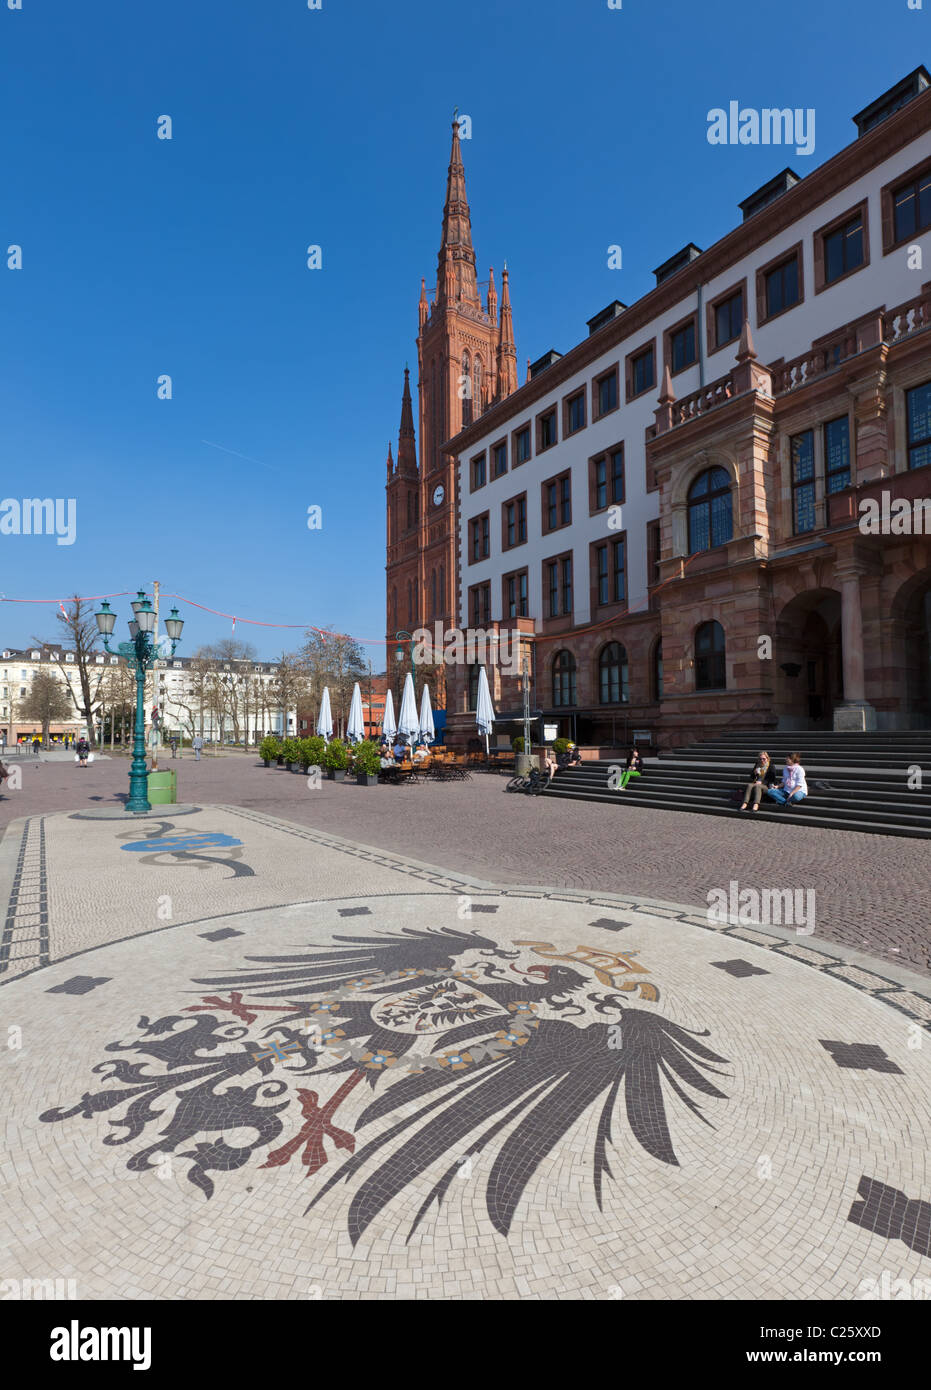 The Wiesbaden City Hall and Schlossplatz Stock Photo